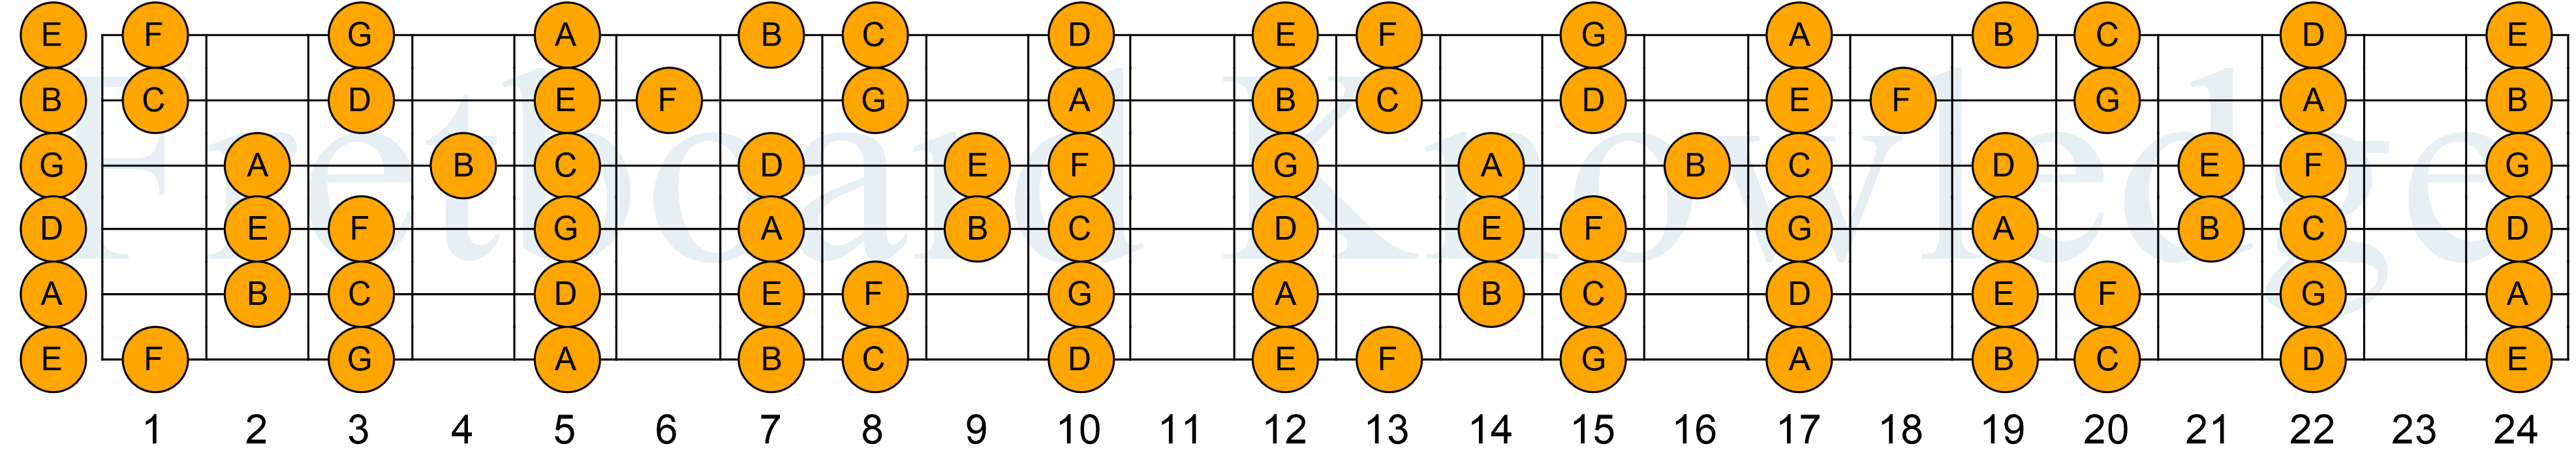 C Major Scale Fretboard Diagram Major Scale - Key of C - Fretboard Image